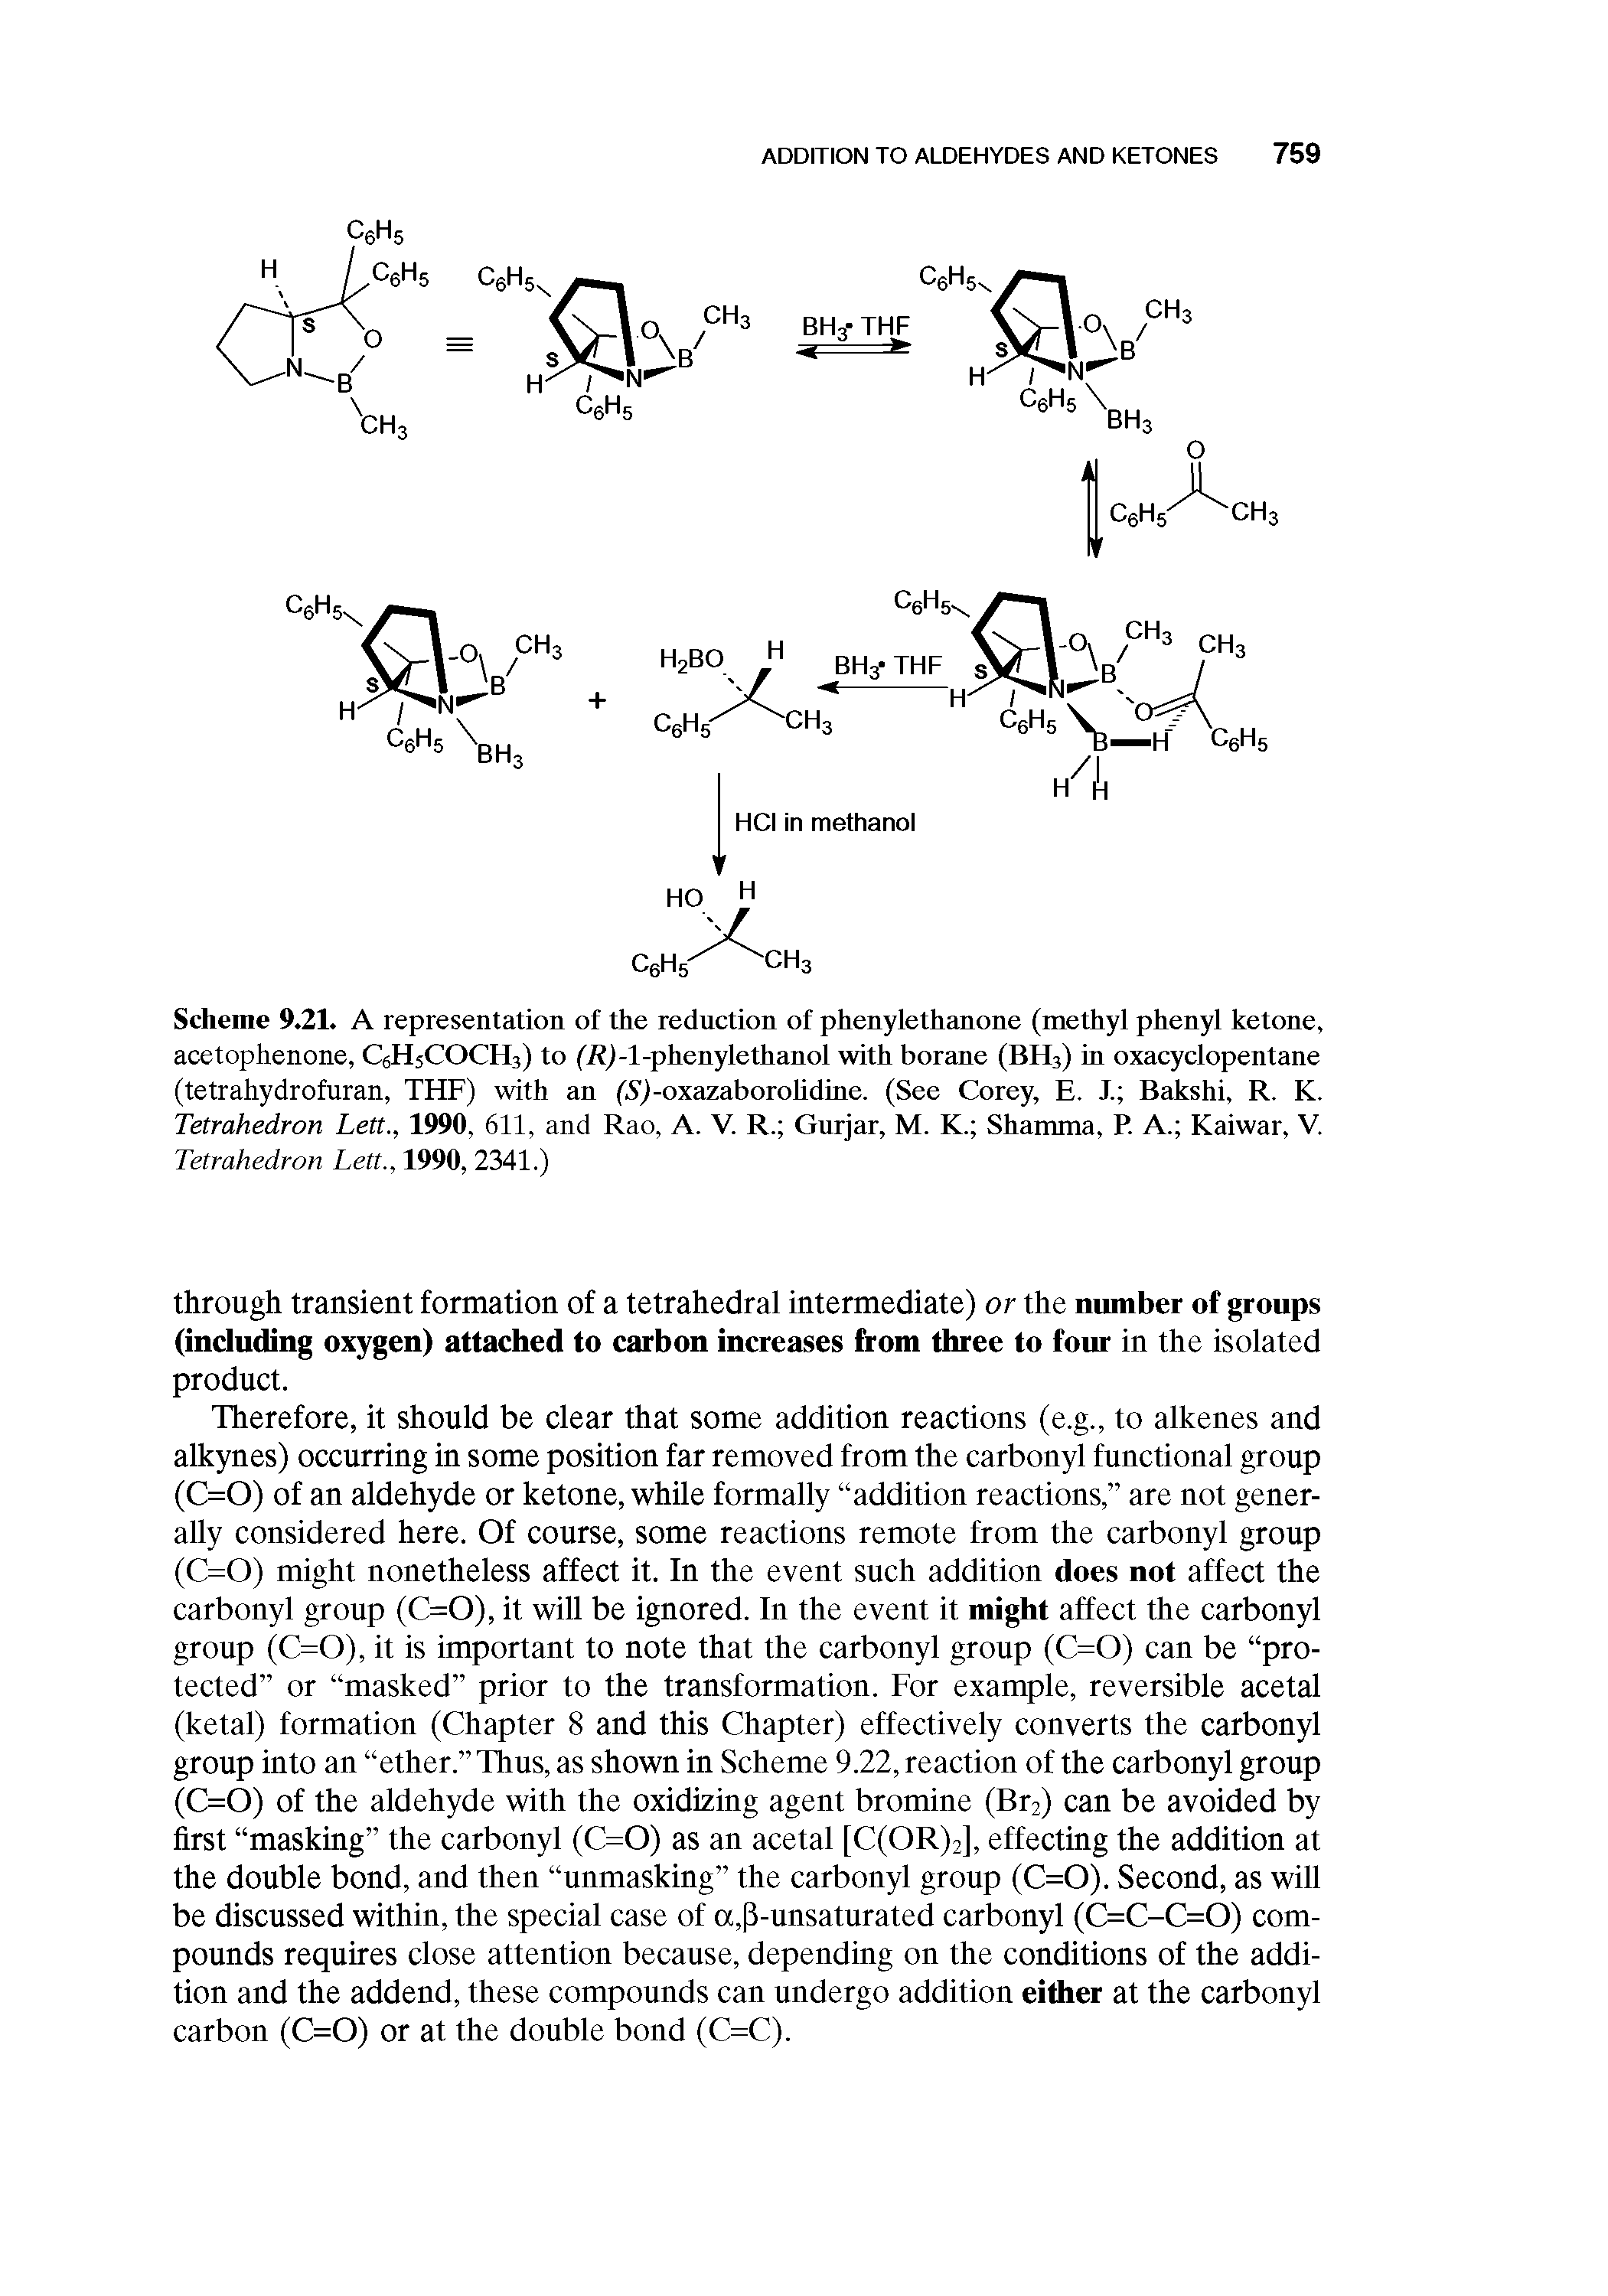 Scheme 9.21. A representation of the reduction of phenylethanone (methyl phenyl ketone, acetophenone, CeHsCOCHa) to (f j-l-phenylethanol with borane (BH3) in oxacyclopentane (tetrahydrofuran, THF) with an (.S j-oxazaborohdine. (See Corey, E. J. Bakshi, R. K. Tetrahedron Lett., 1990, 611, and Rao, A. V. R. Guijar, M. K. Shamma, P. A. Kaiwar, V.